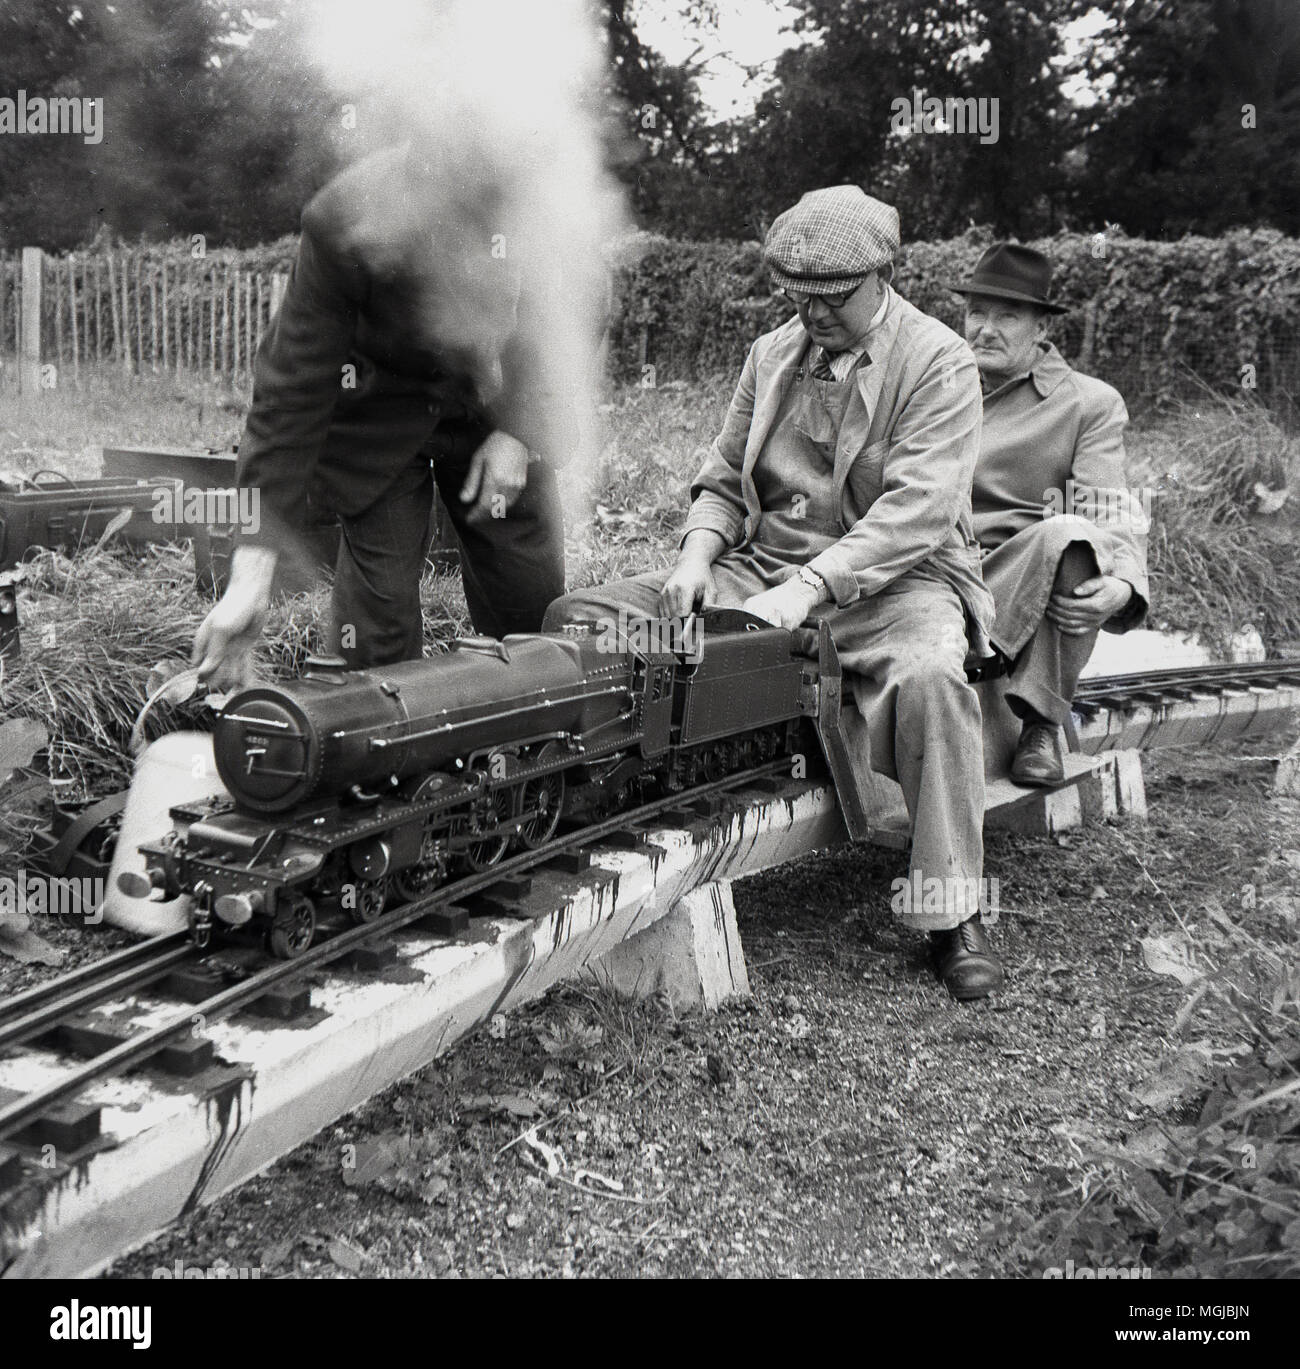 1950s, históricos, macho adulto amteur entusiastas de ferrocarril con un tren de vapor en un trenecito, Inglaterra, Reino Unido. Foto de stock